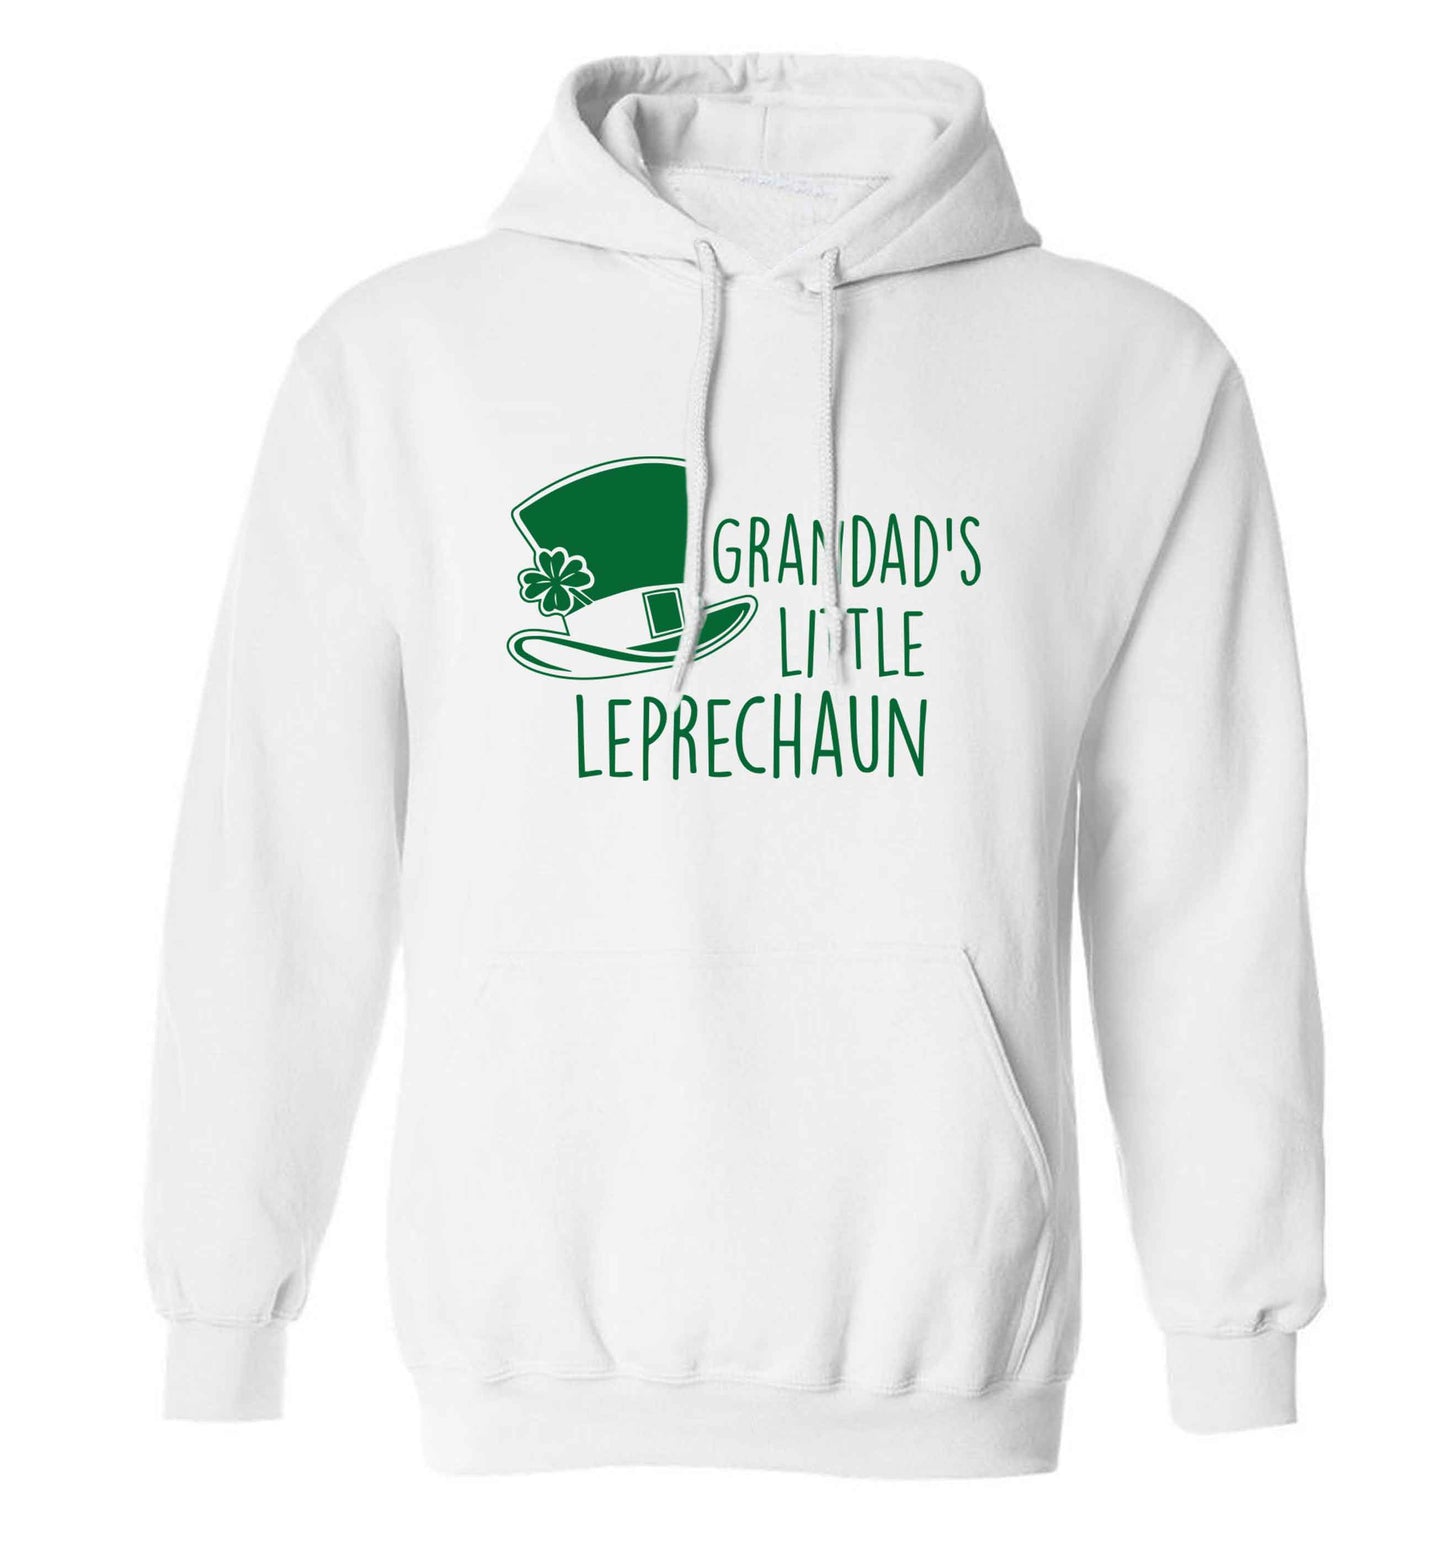 Grandad's little leprechaun adults unisex white hoodie 2XL